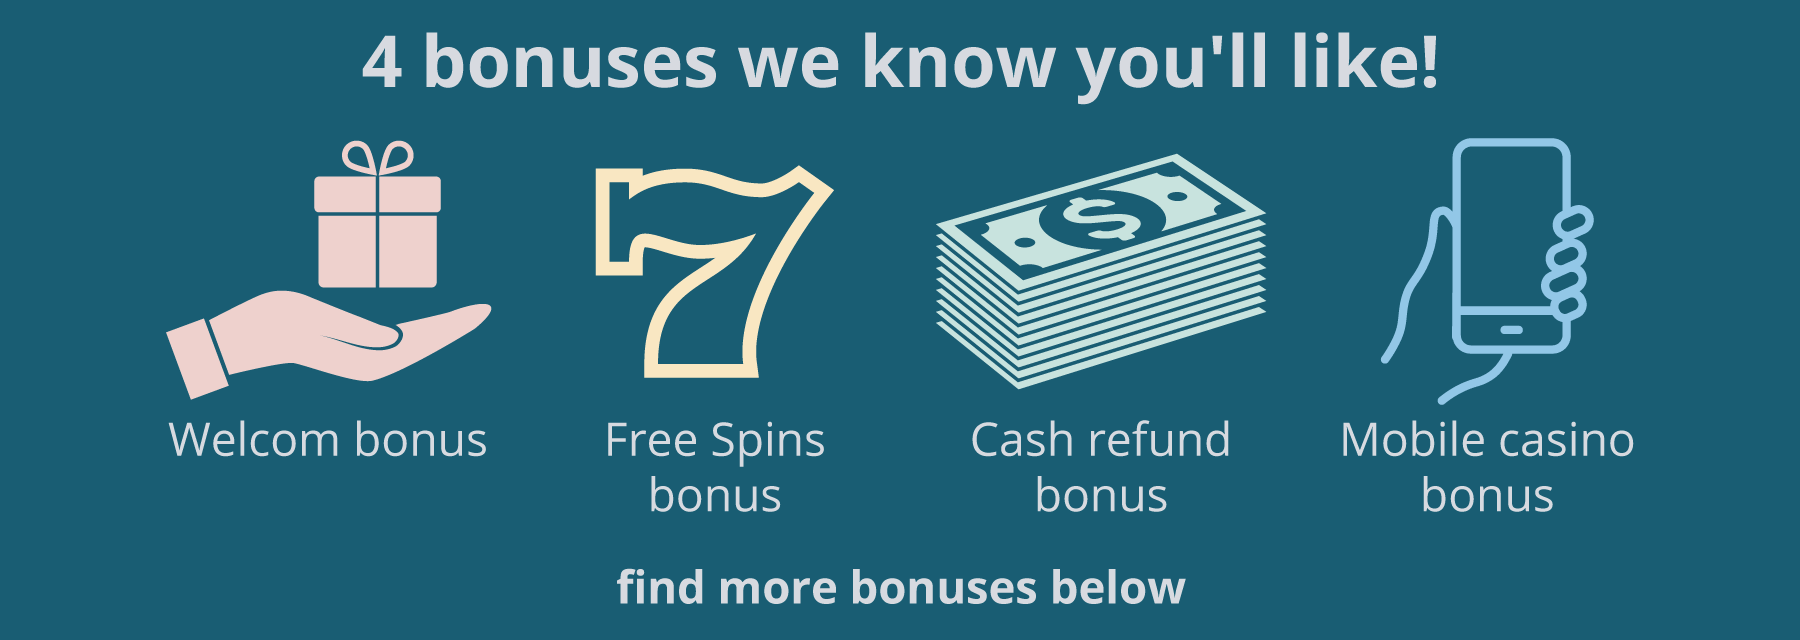 Casino Bonuses you'll like - Emirates Casino Online Casino Bonus Guide